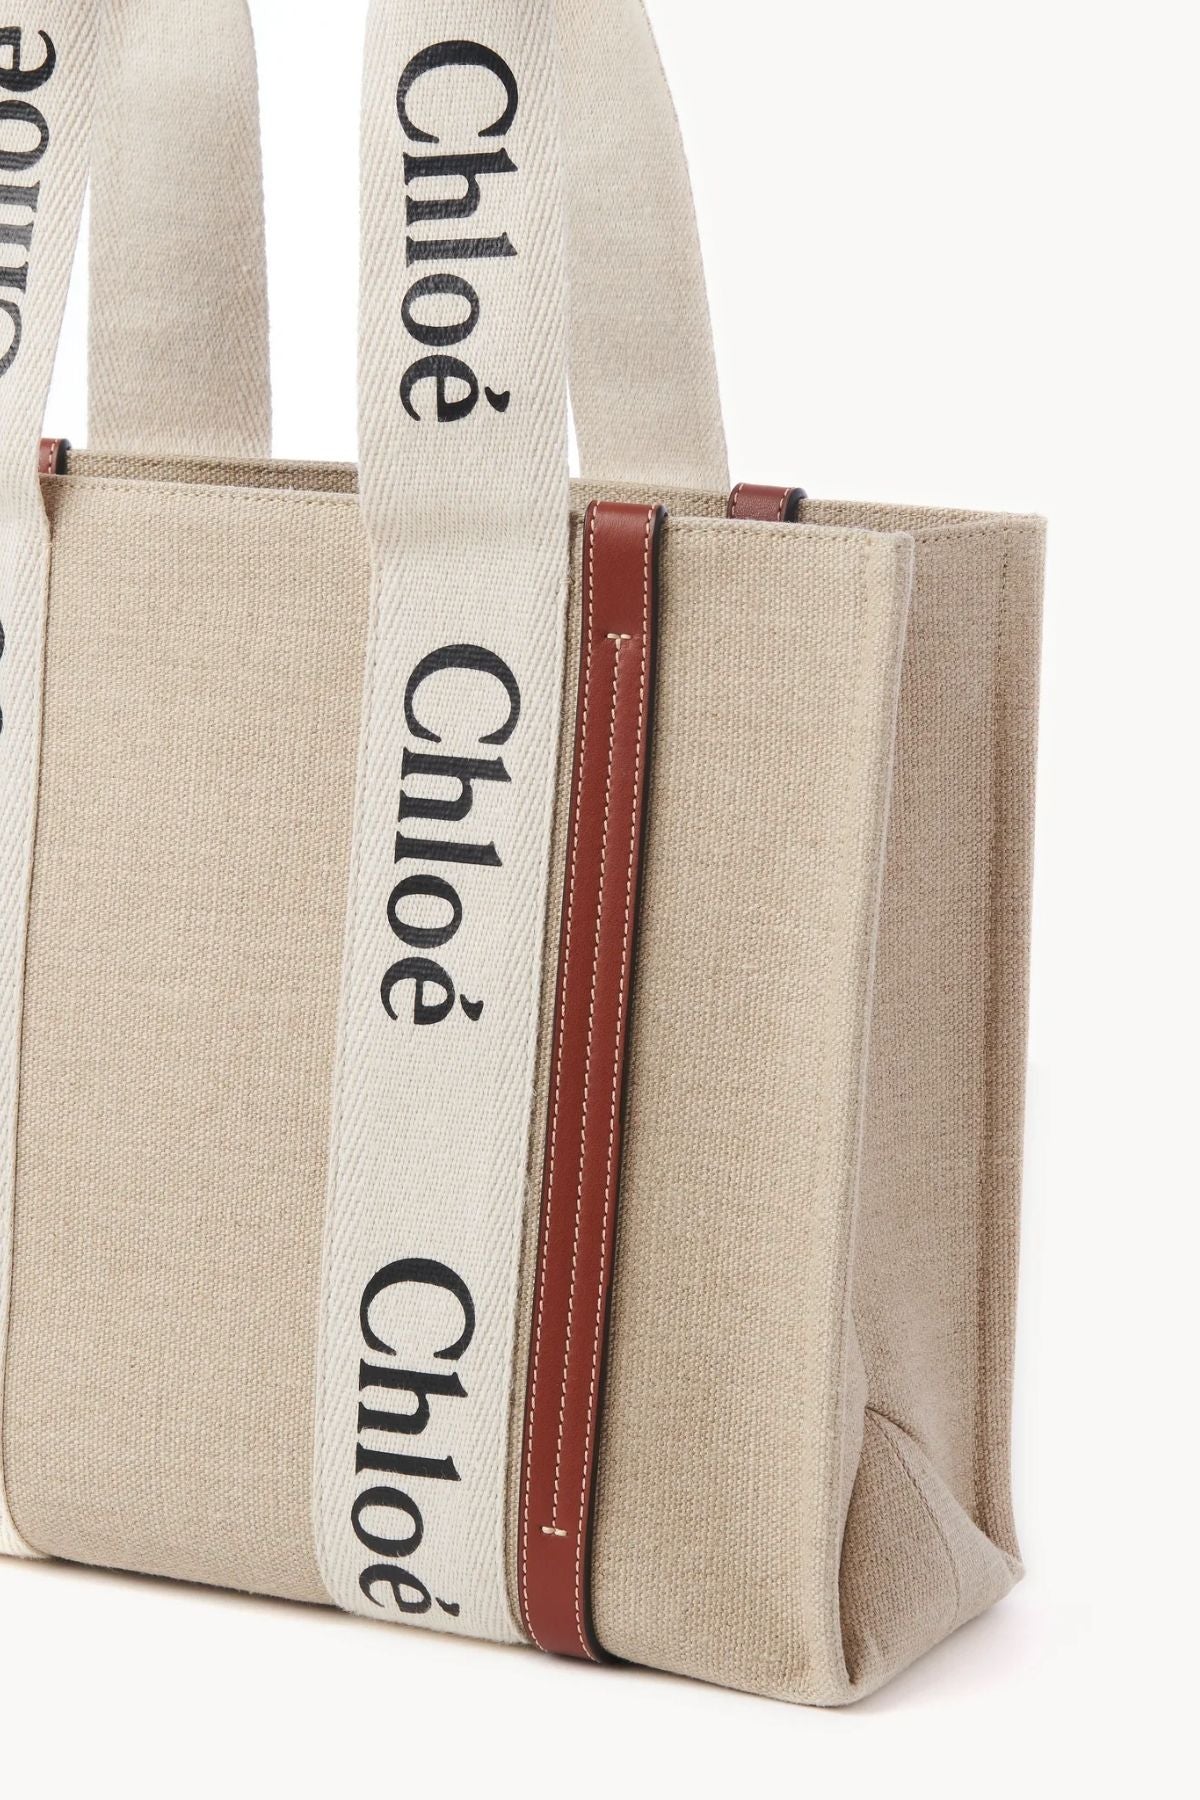 Chloé Medium Woody Tote Bag - White/ Brown